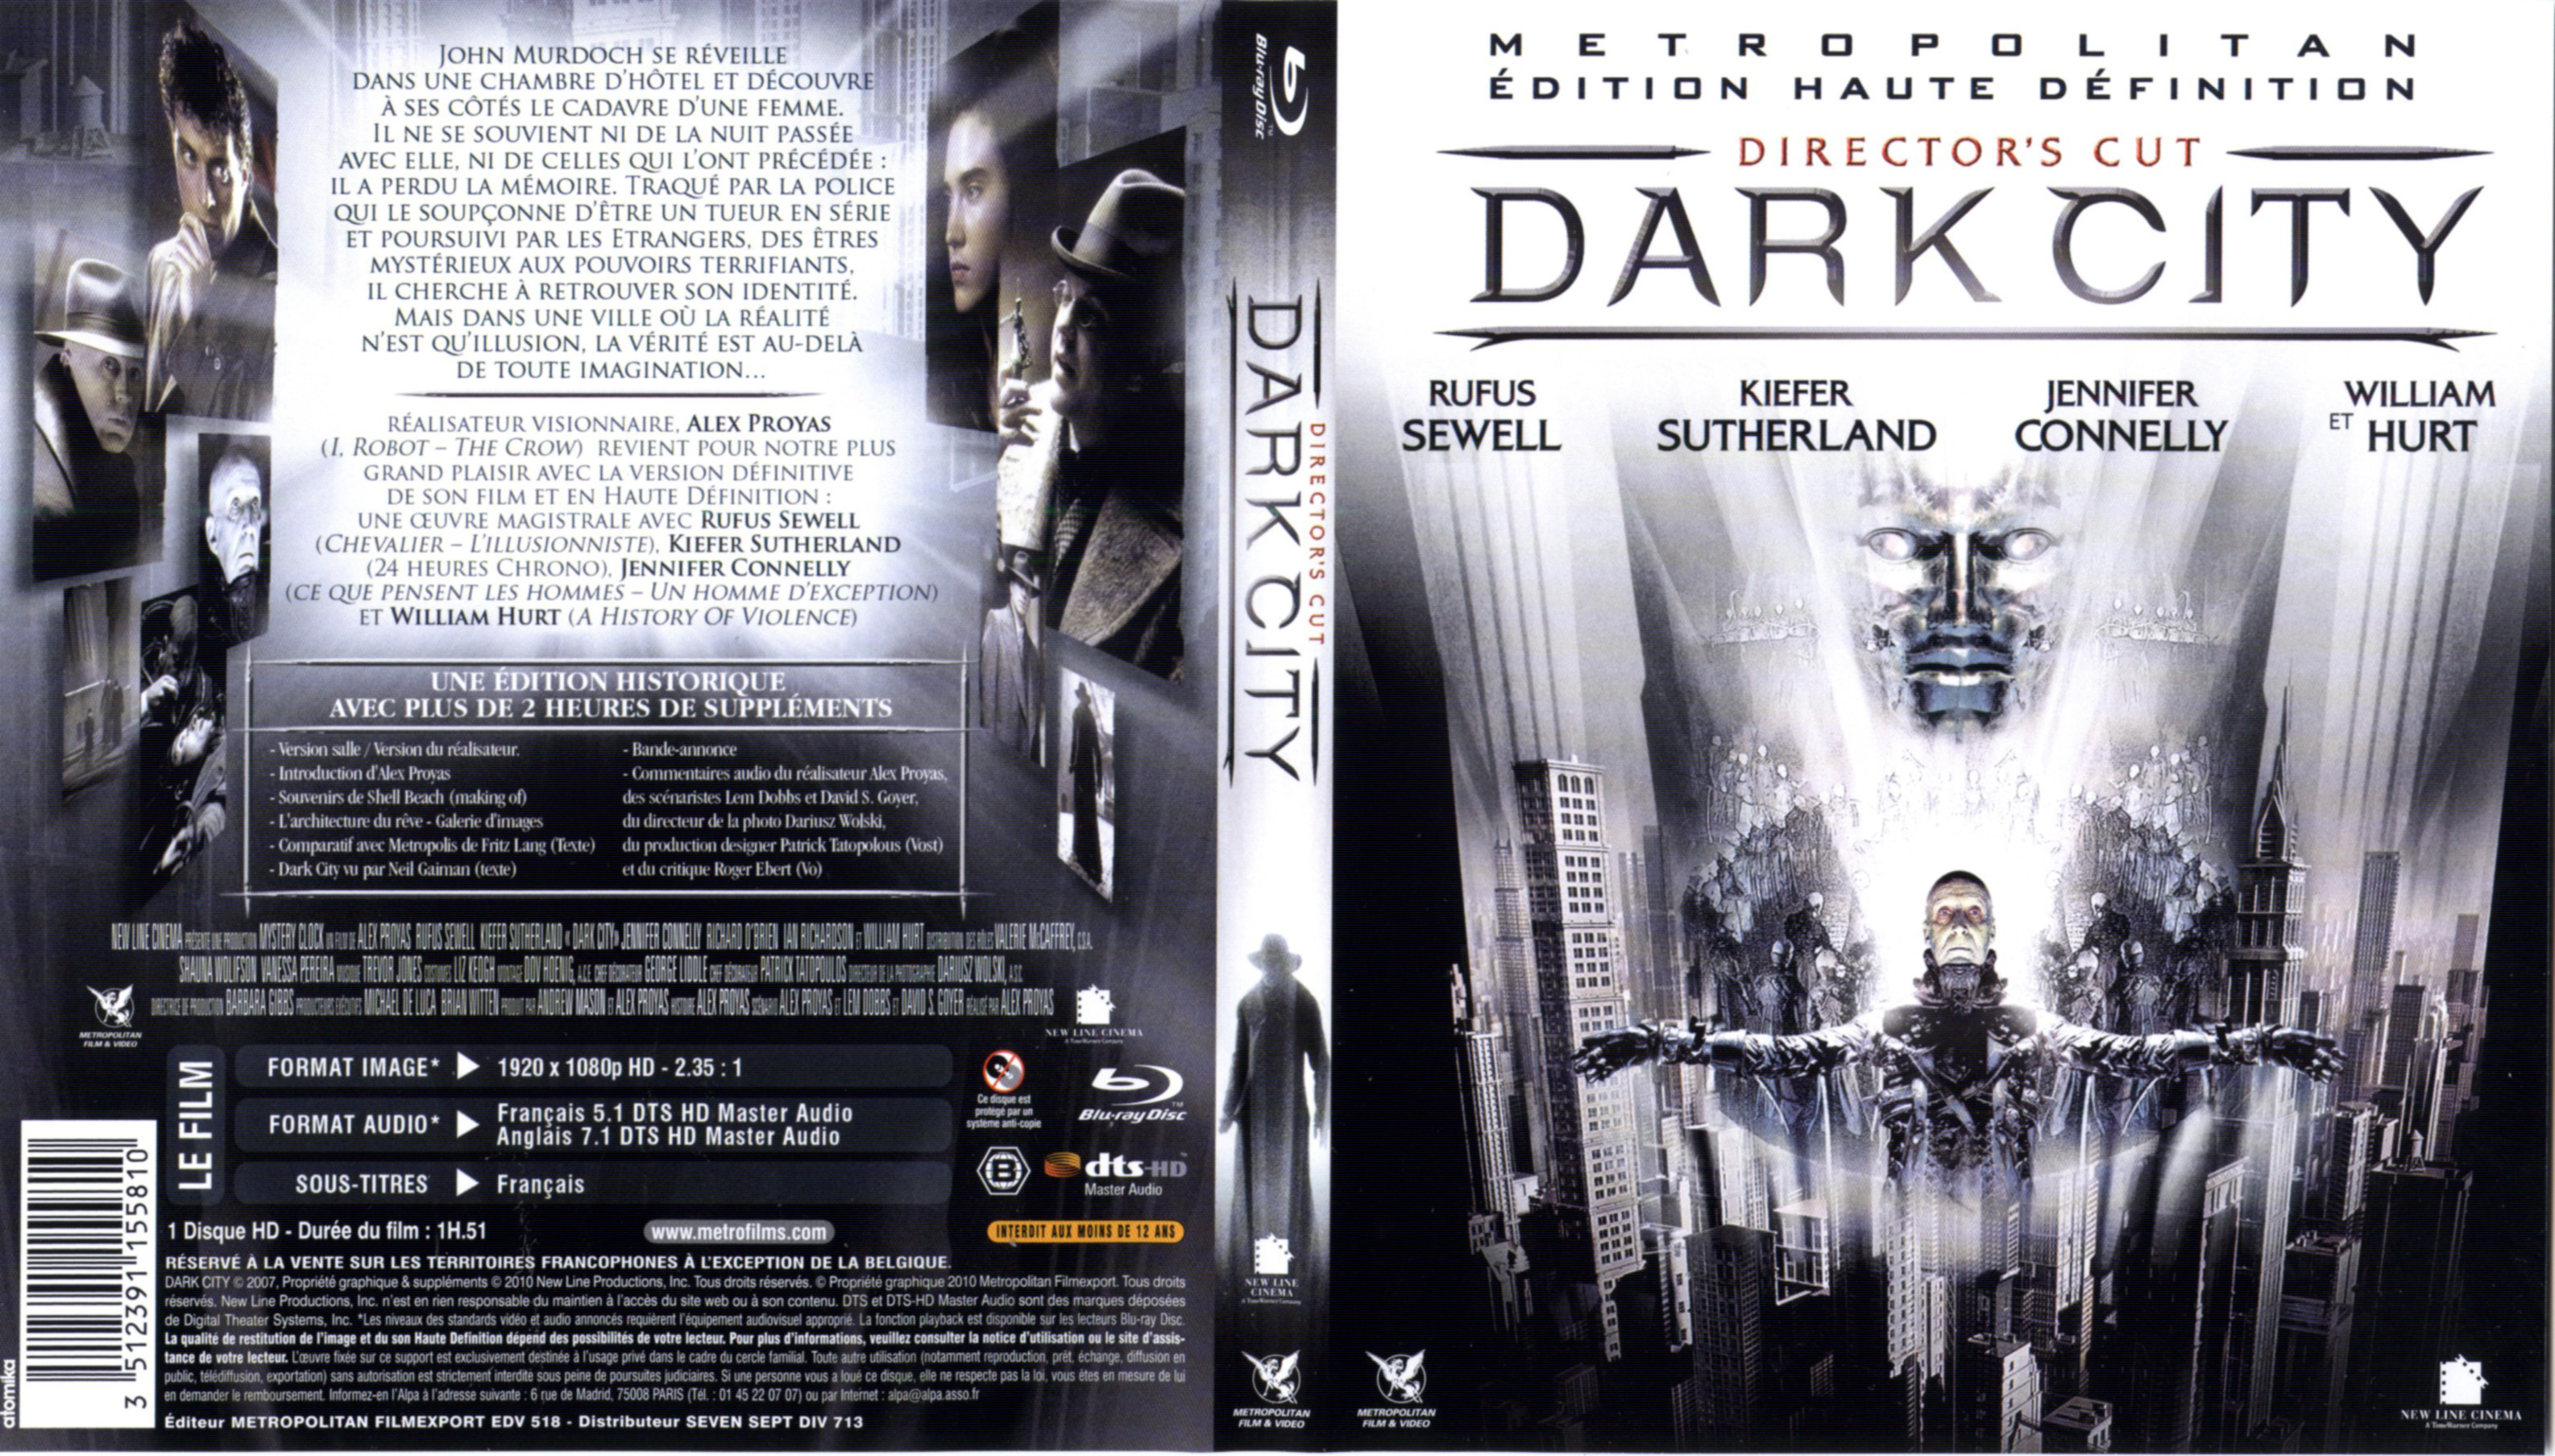 Jaquette DVD Dark city (BLU-RAY)